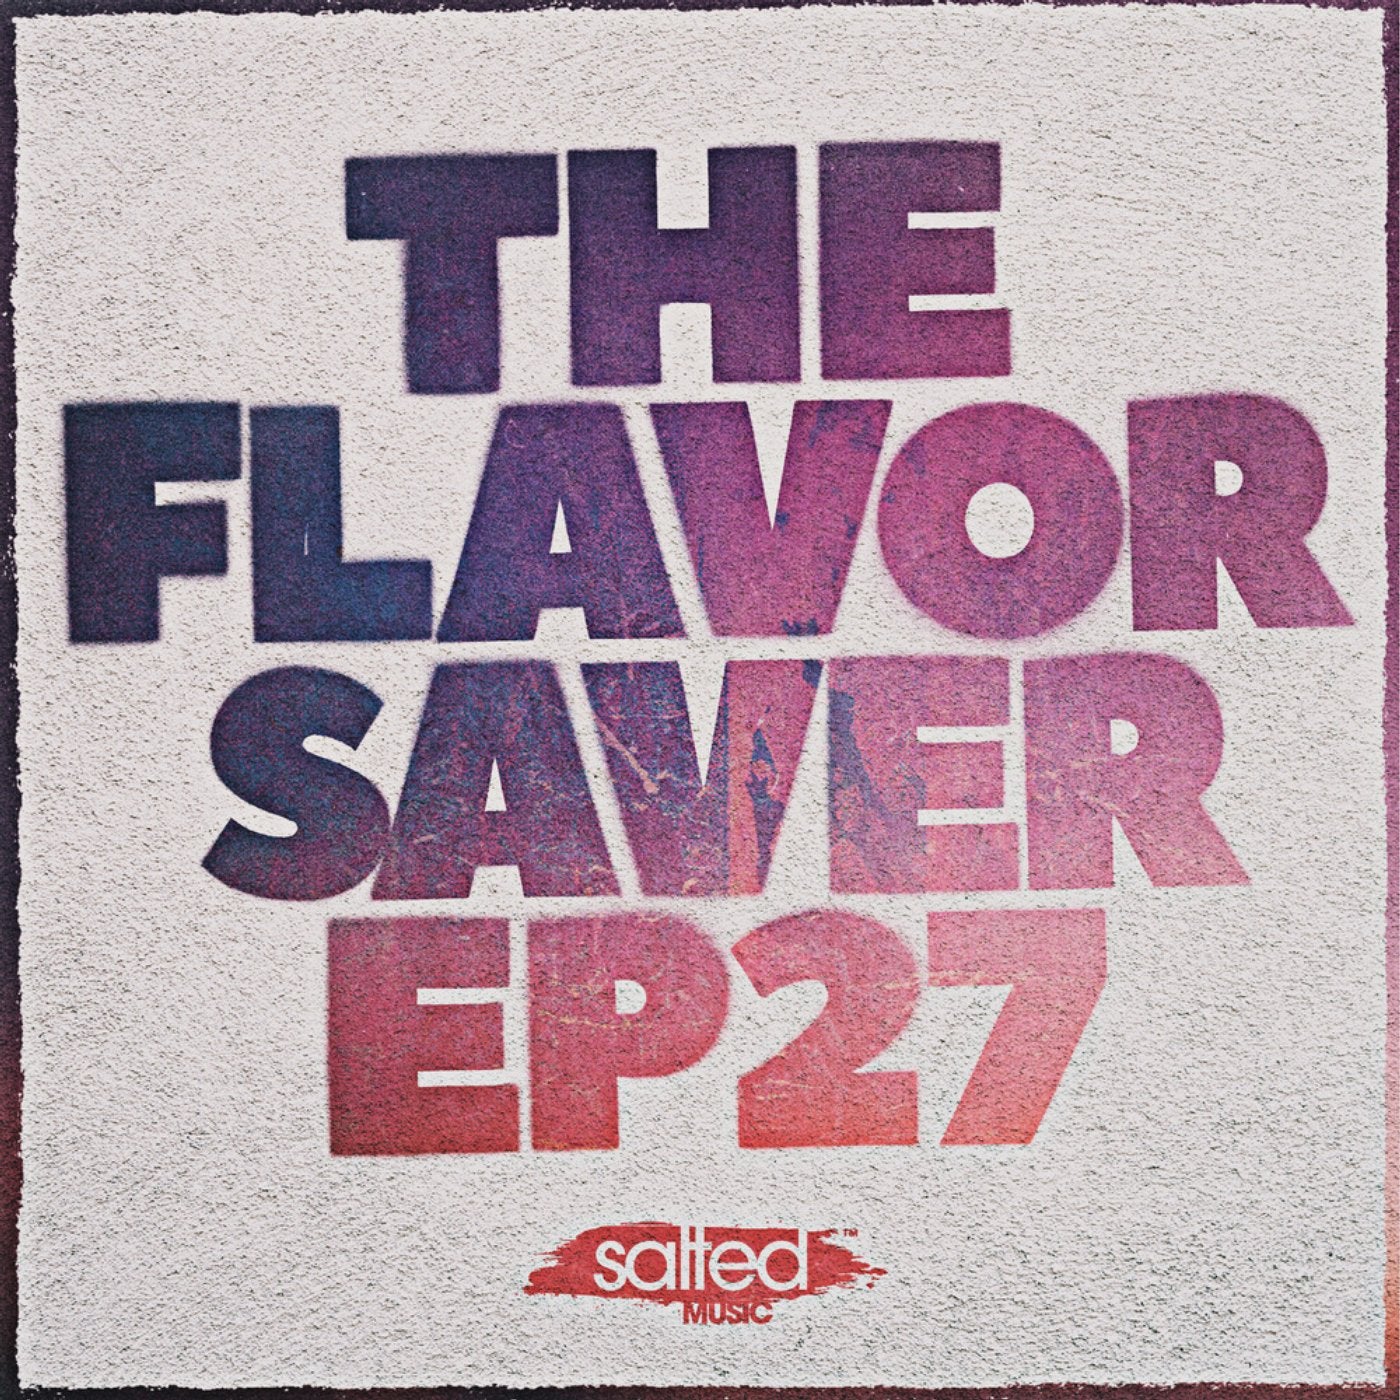 The Flavor Saver, Ep. 27